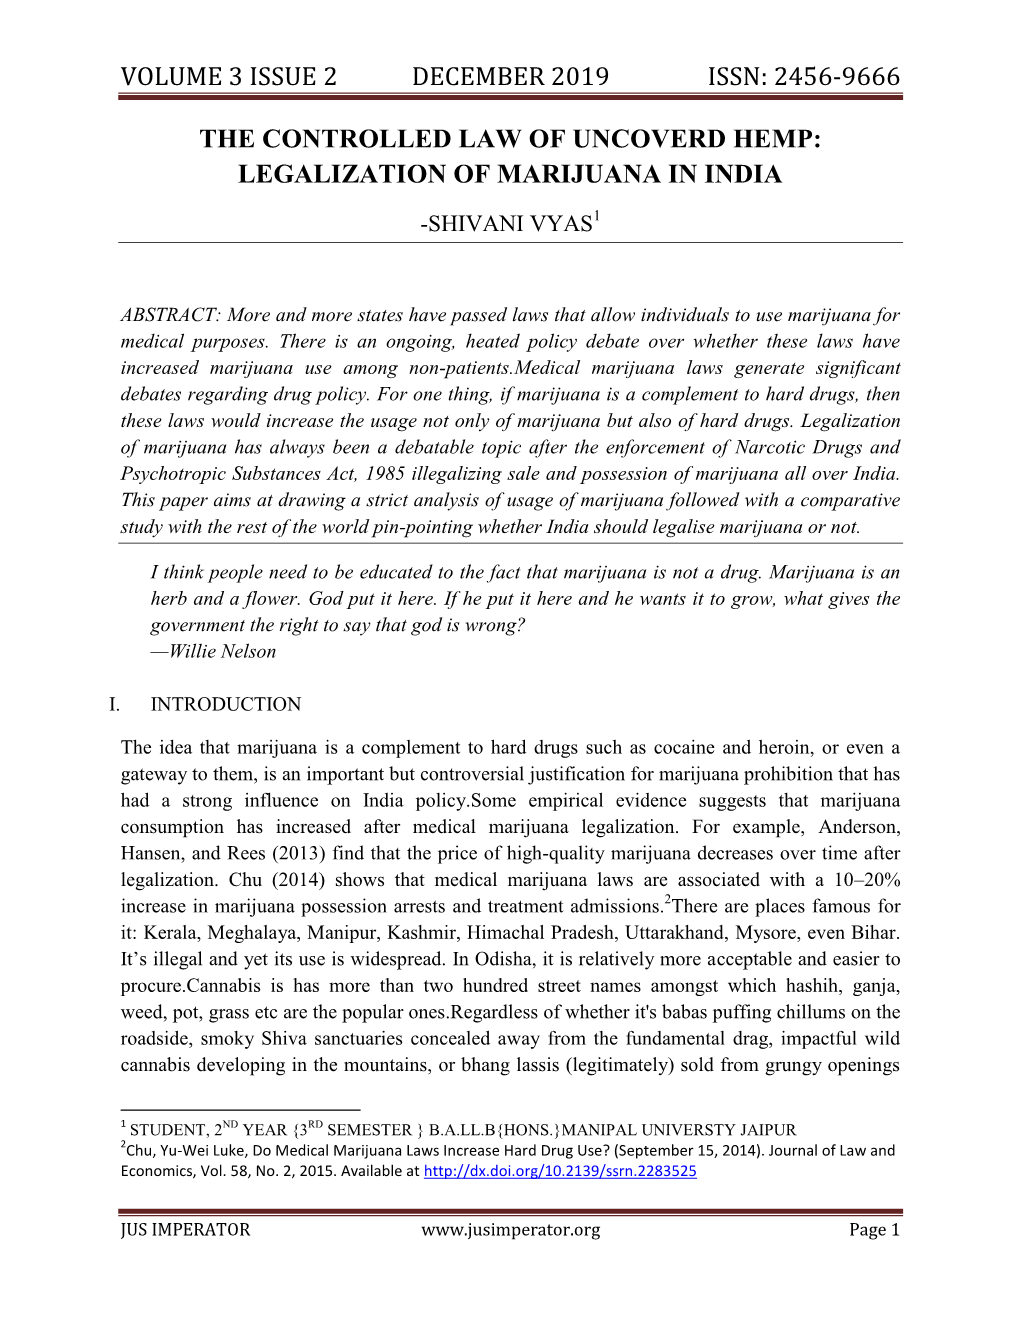 Legalization of Marijuana in India